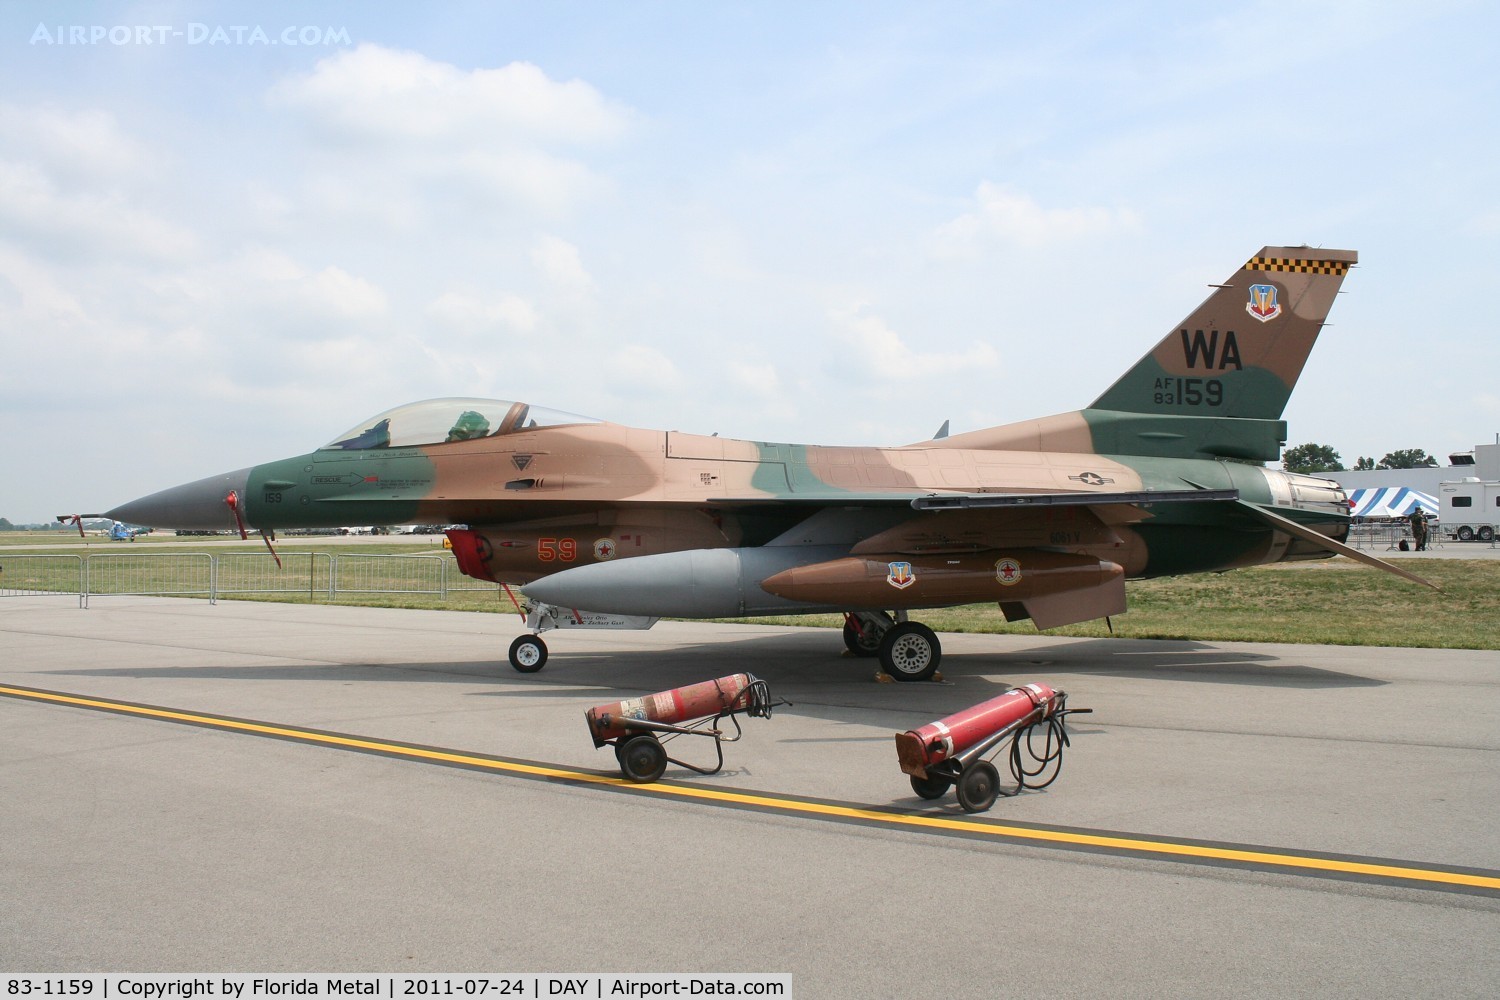 83-1159, 1983 General Dynamics F-16C Fighting Falcon C/N 5C-42, F-16C in aggressor colors